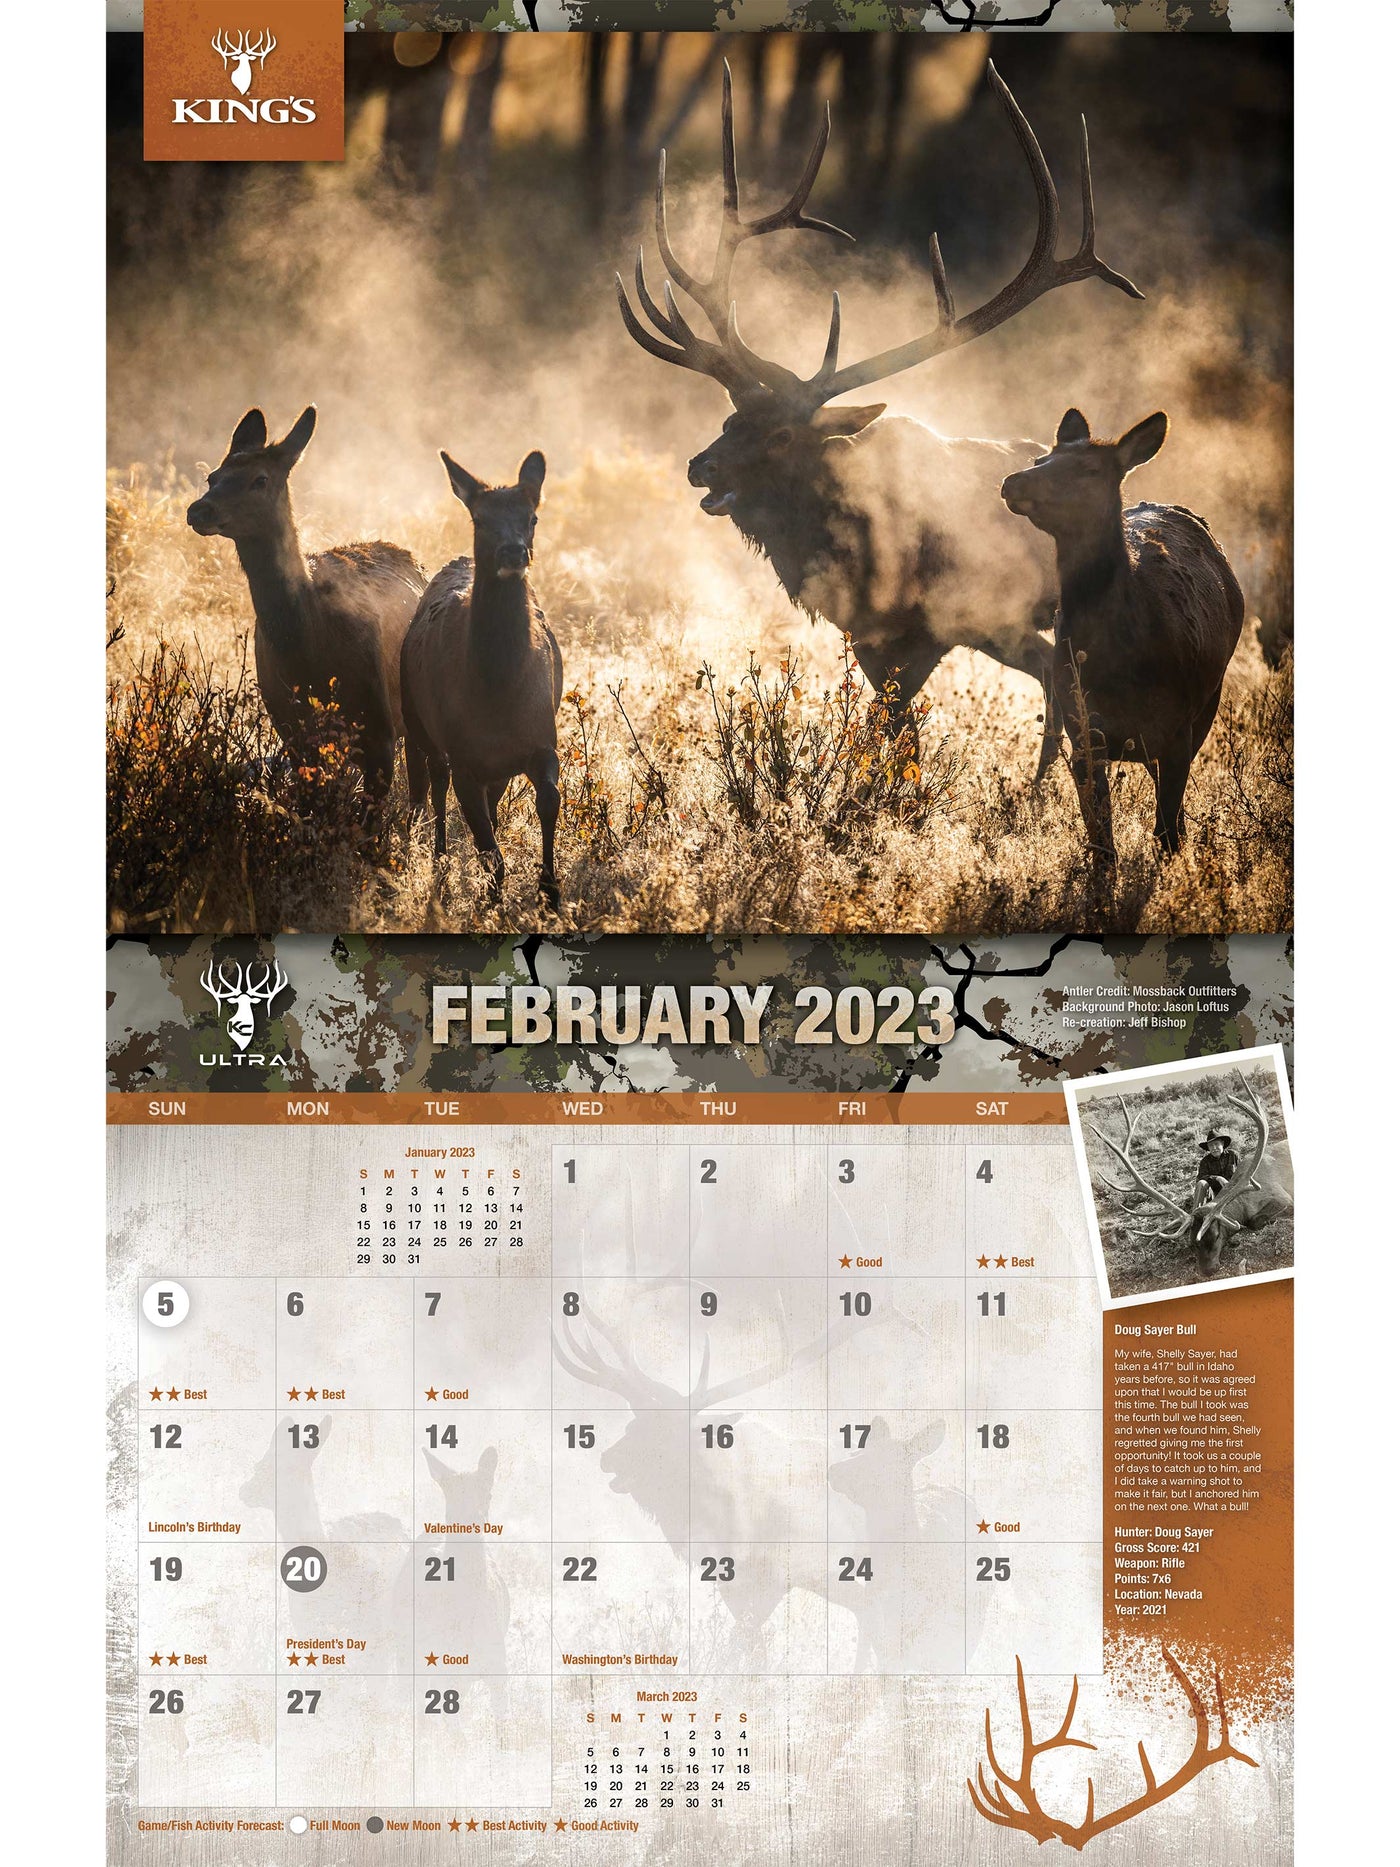 2023 King's Bull Elk Calendar | Corbotras lochi